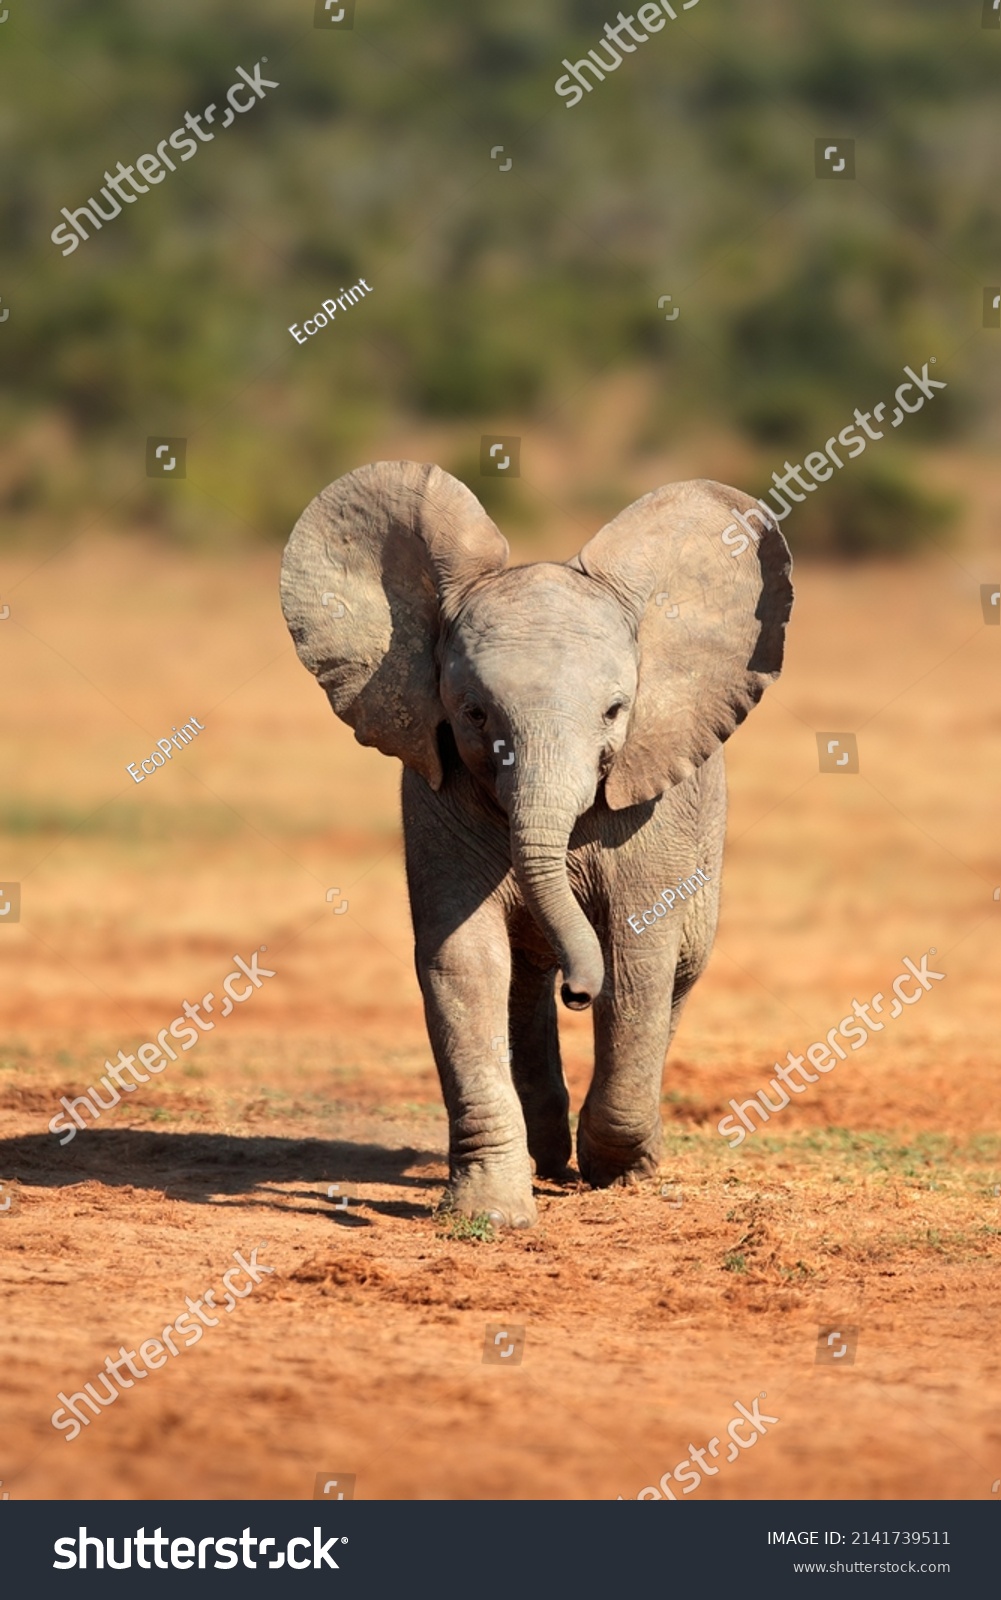 A cute baby African elephant (Loxodonta africana), Addo Elephant National Park, South Africa
 #2141739511